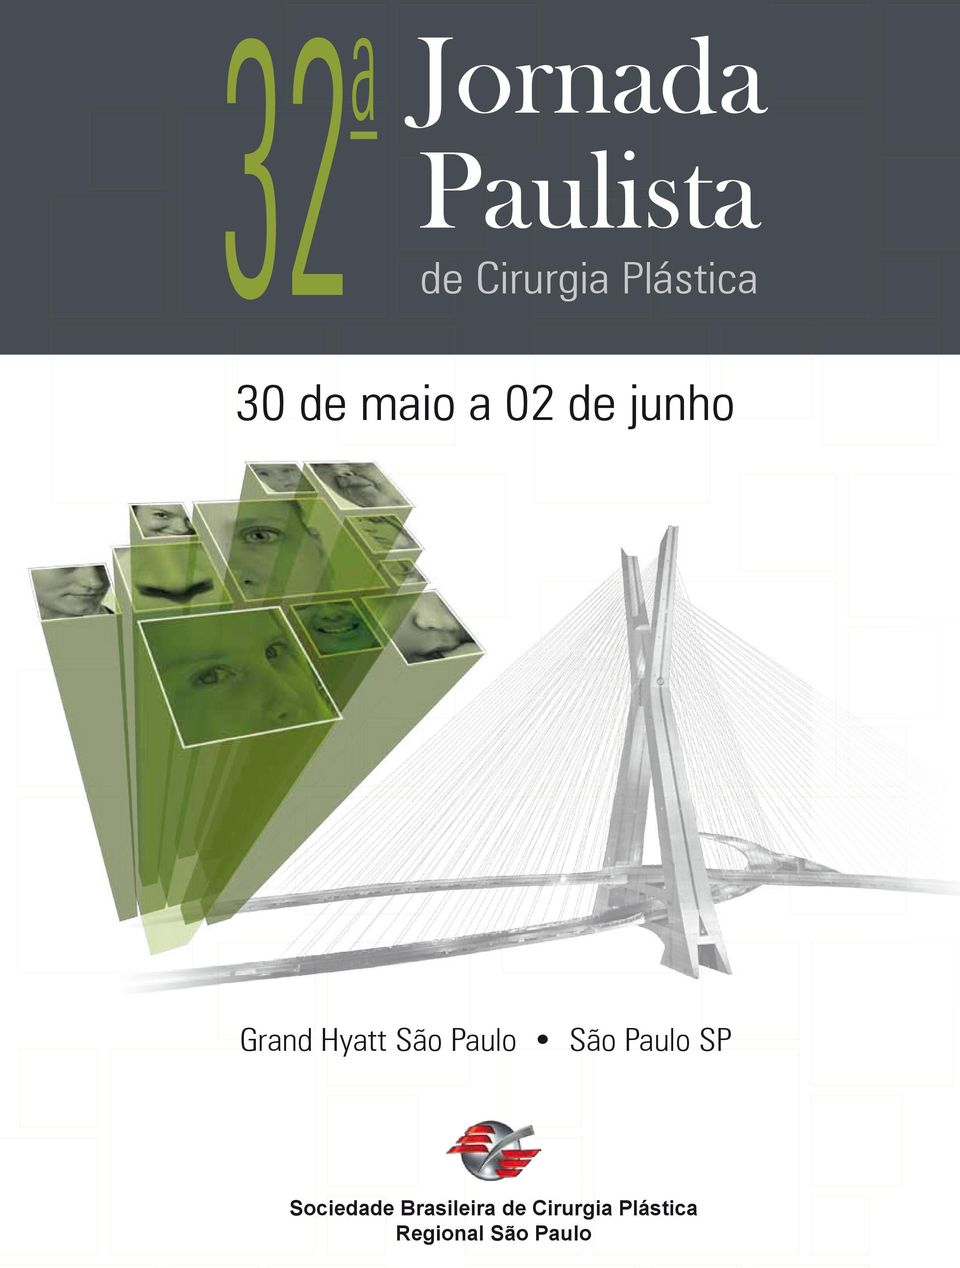 Hyatt São Paulo São Paulo SP Sociedade